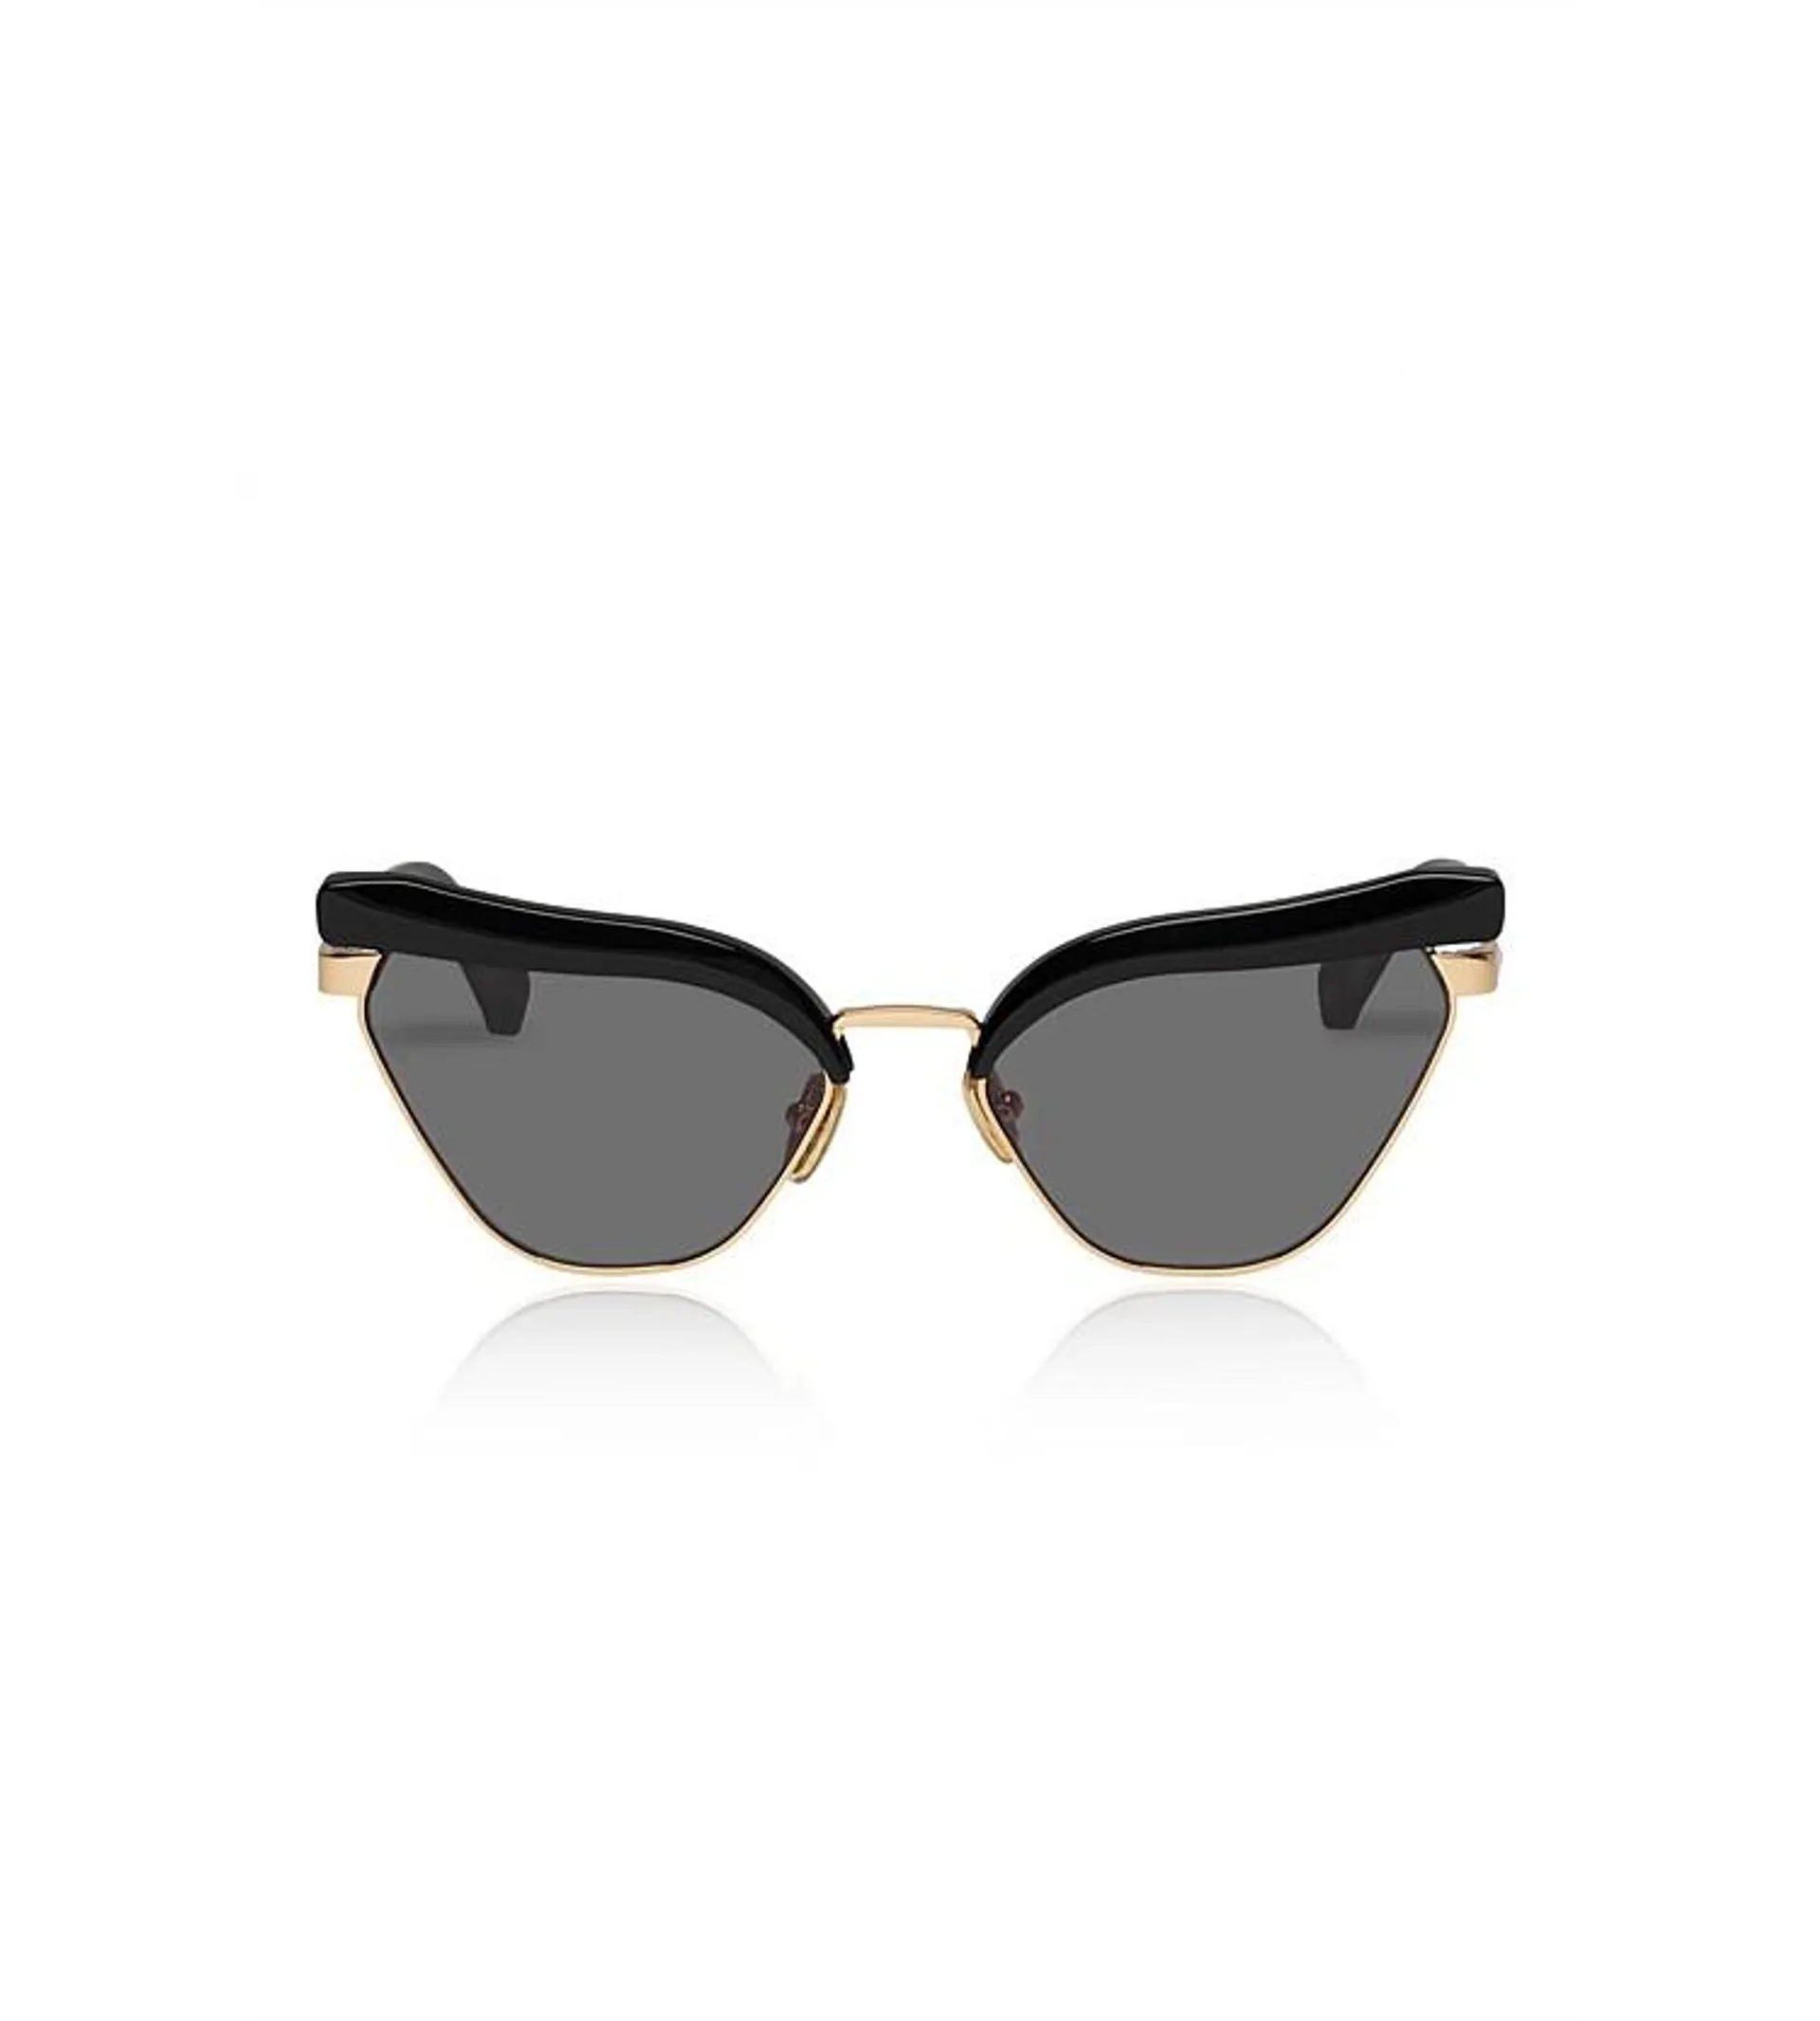 Karen Walker Fantasia Black Sunglasses